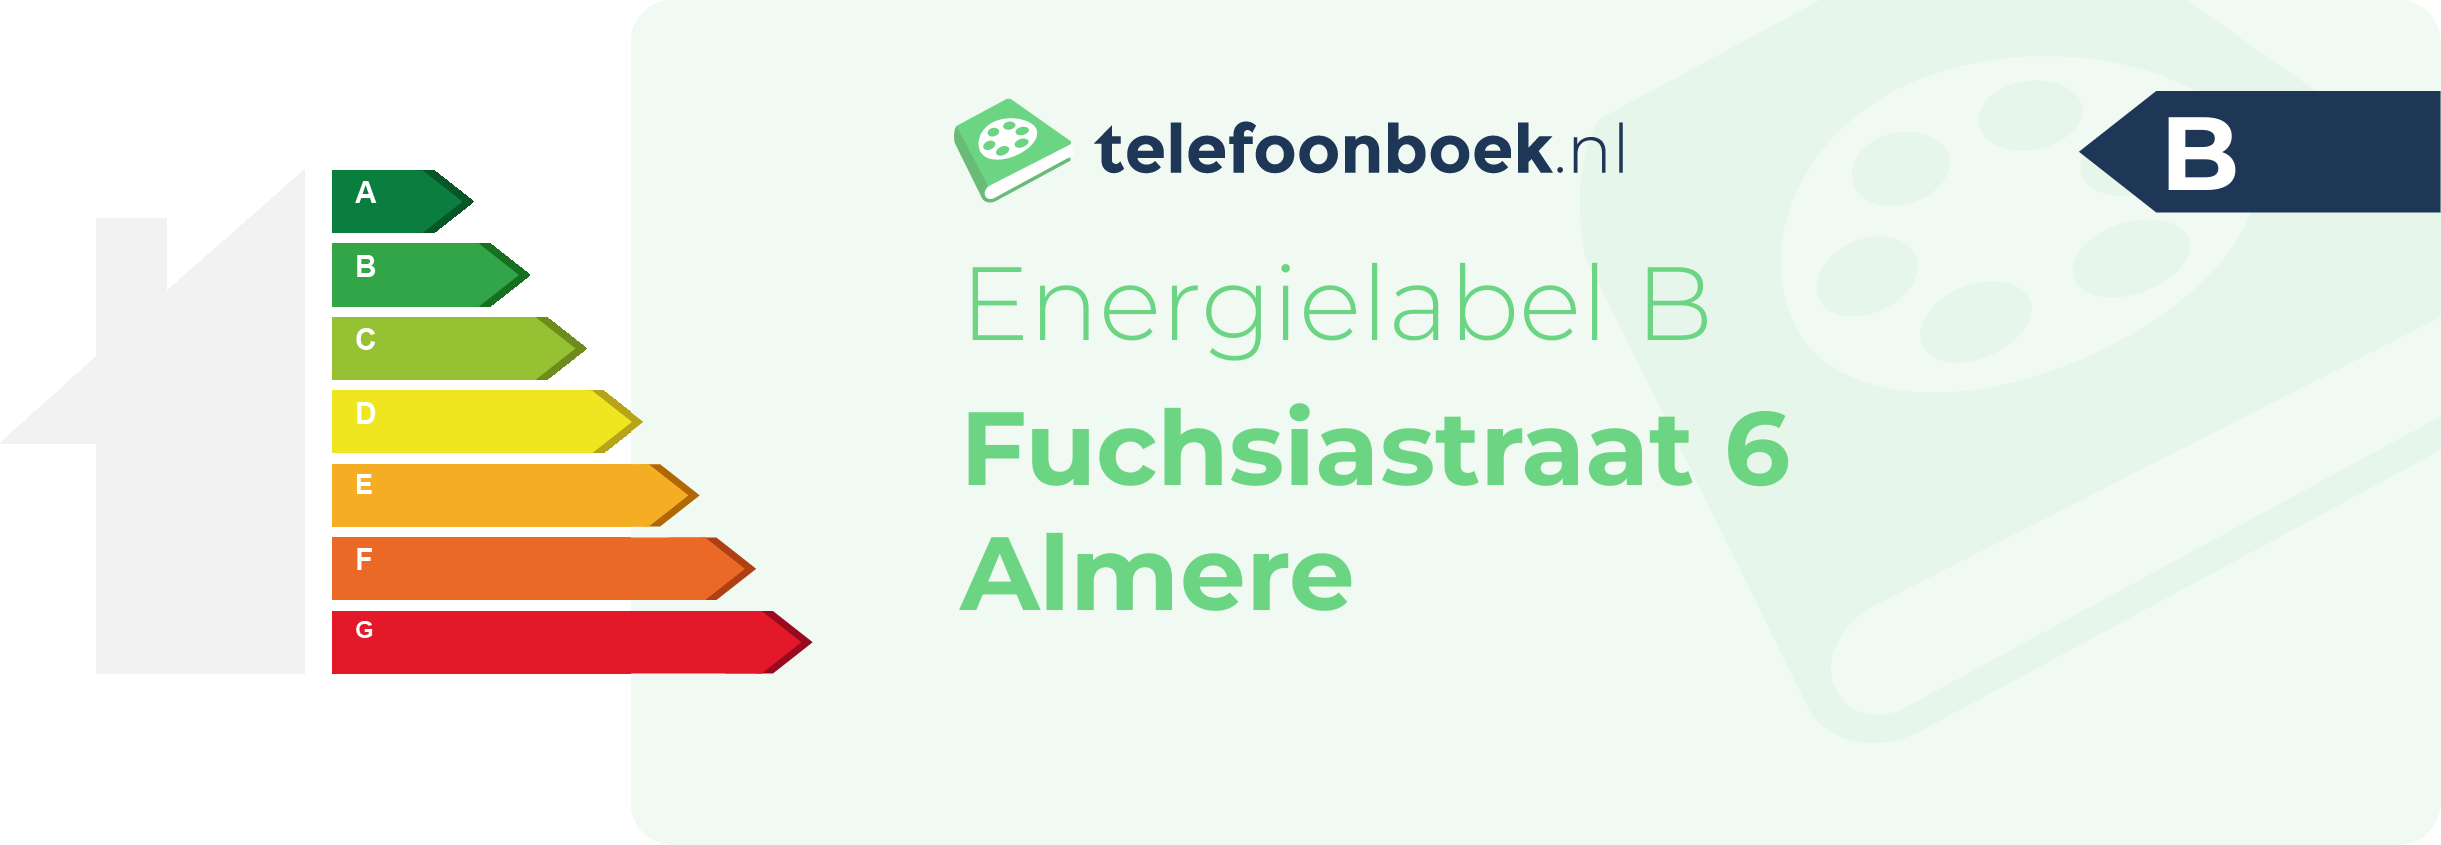 Energielabel Fuchsiastraat 6 Almere